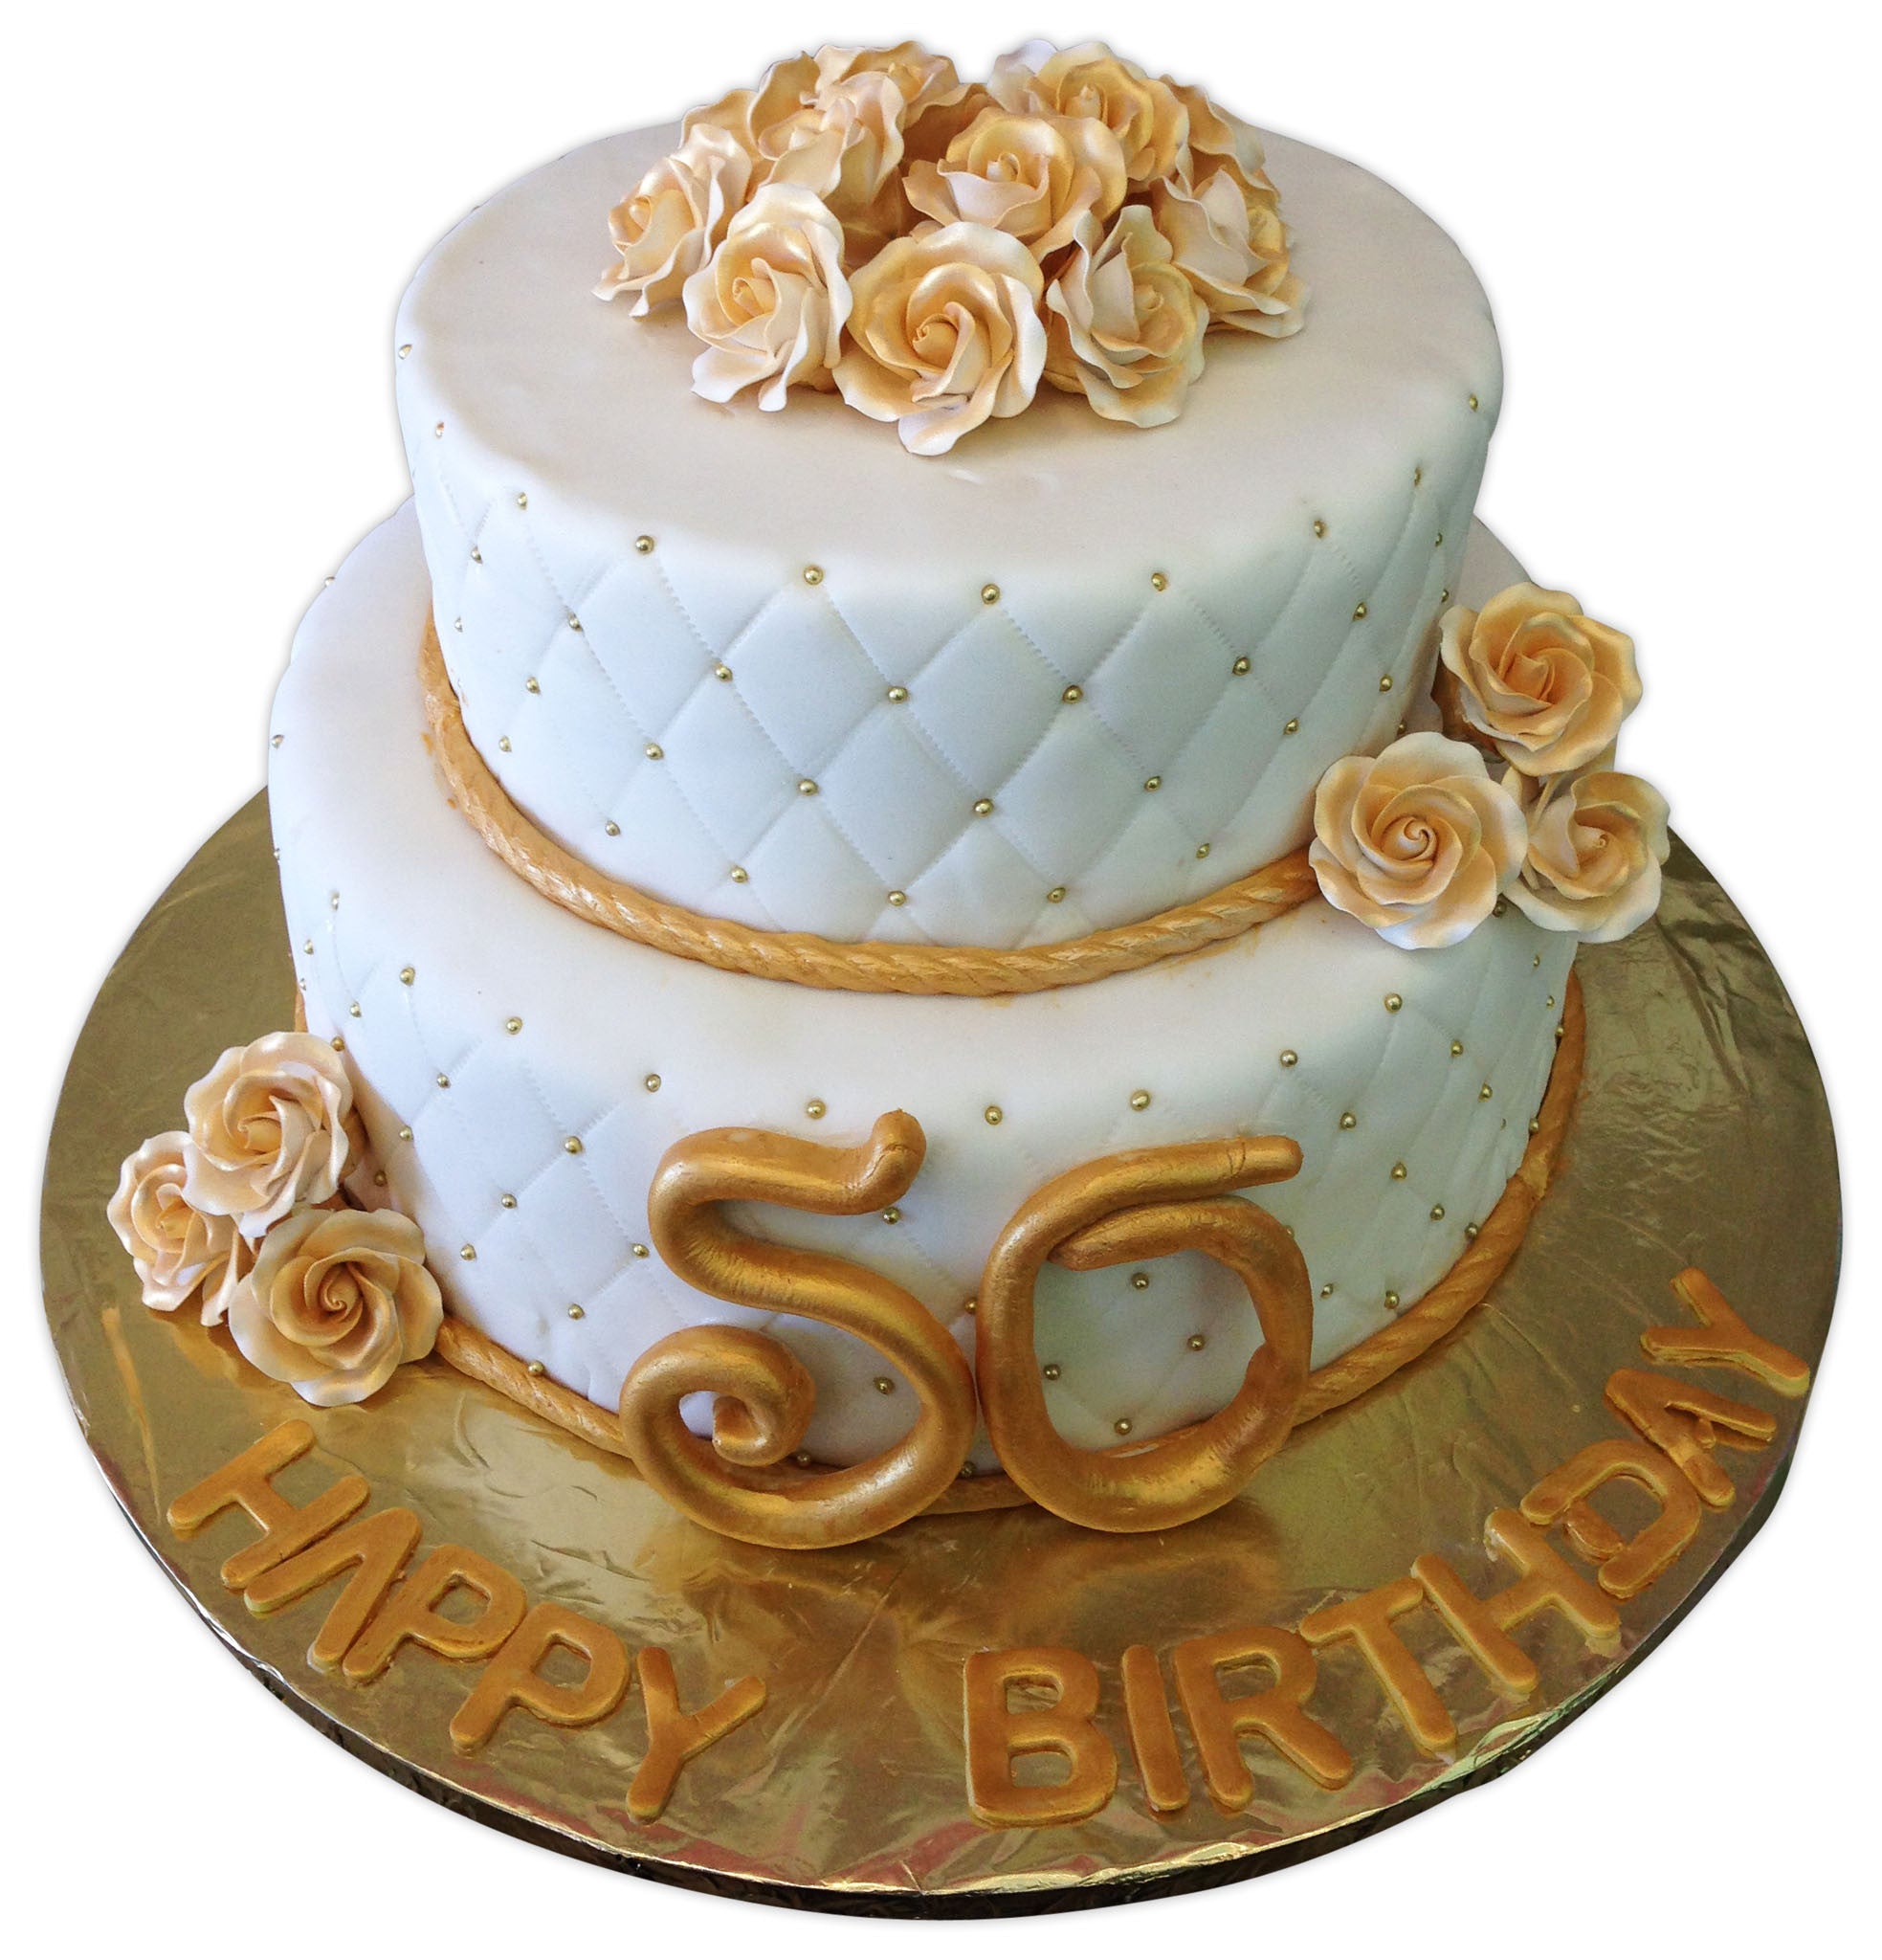 Jack Daniels 50th Birthday Cake Delivery in Delhi NCR - ₹4,599.00 Cake  Express